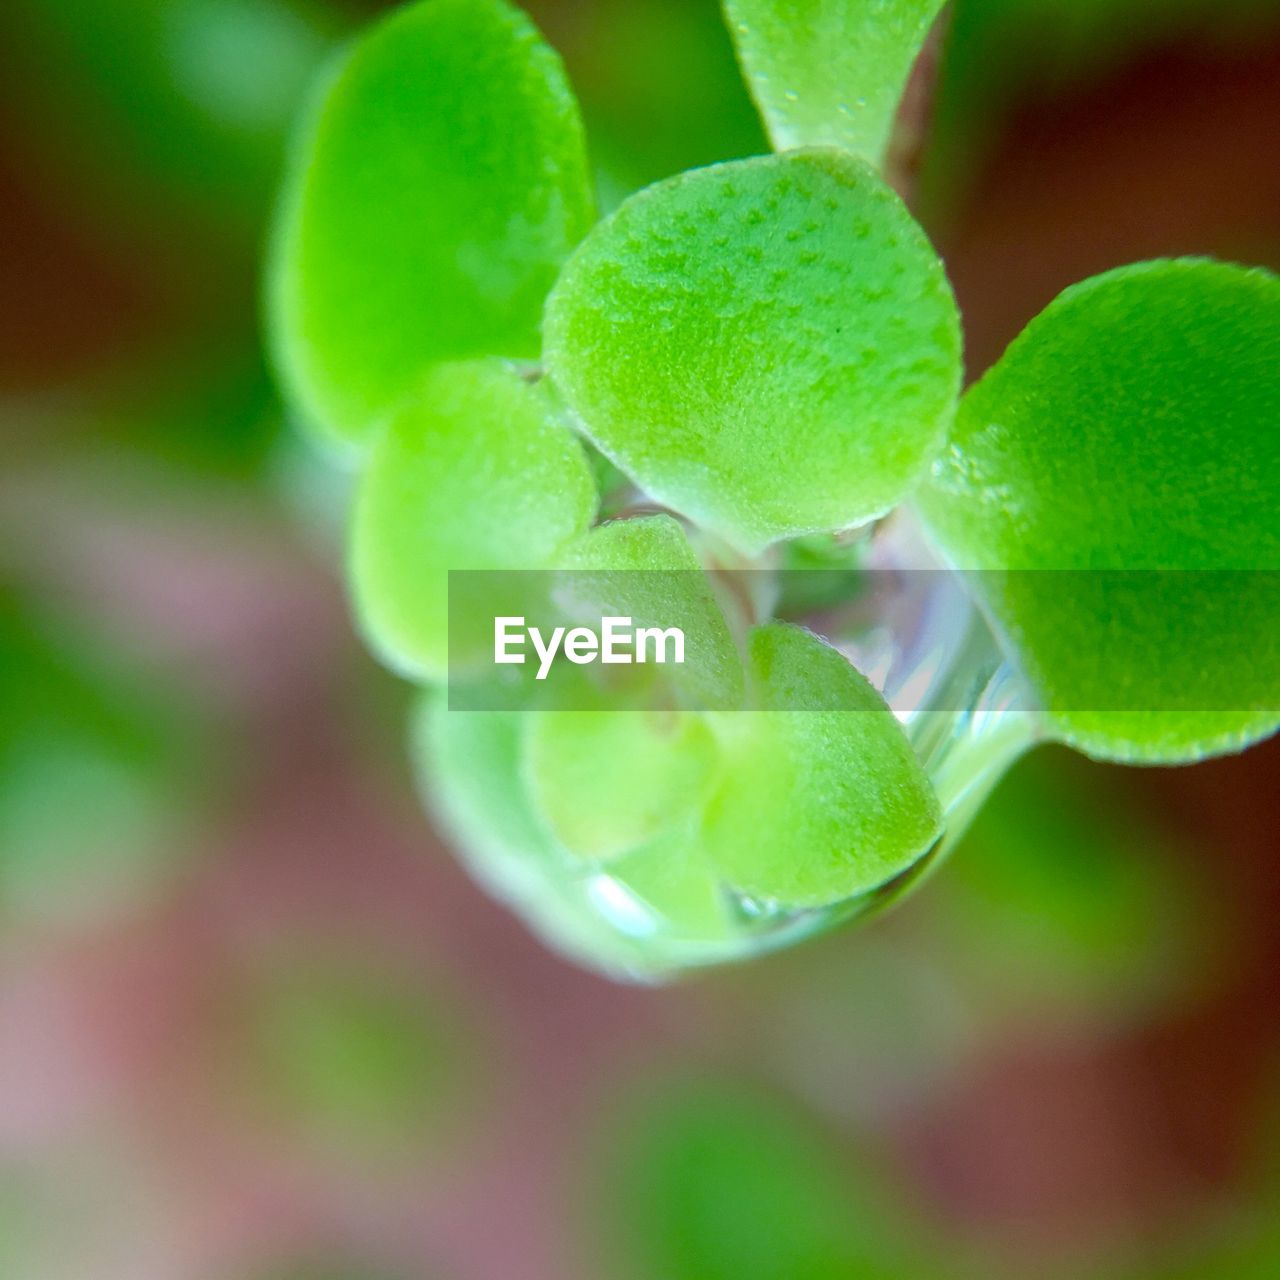 Detail dew drop on plant leaf